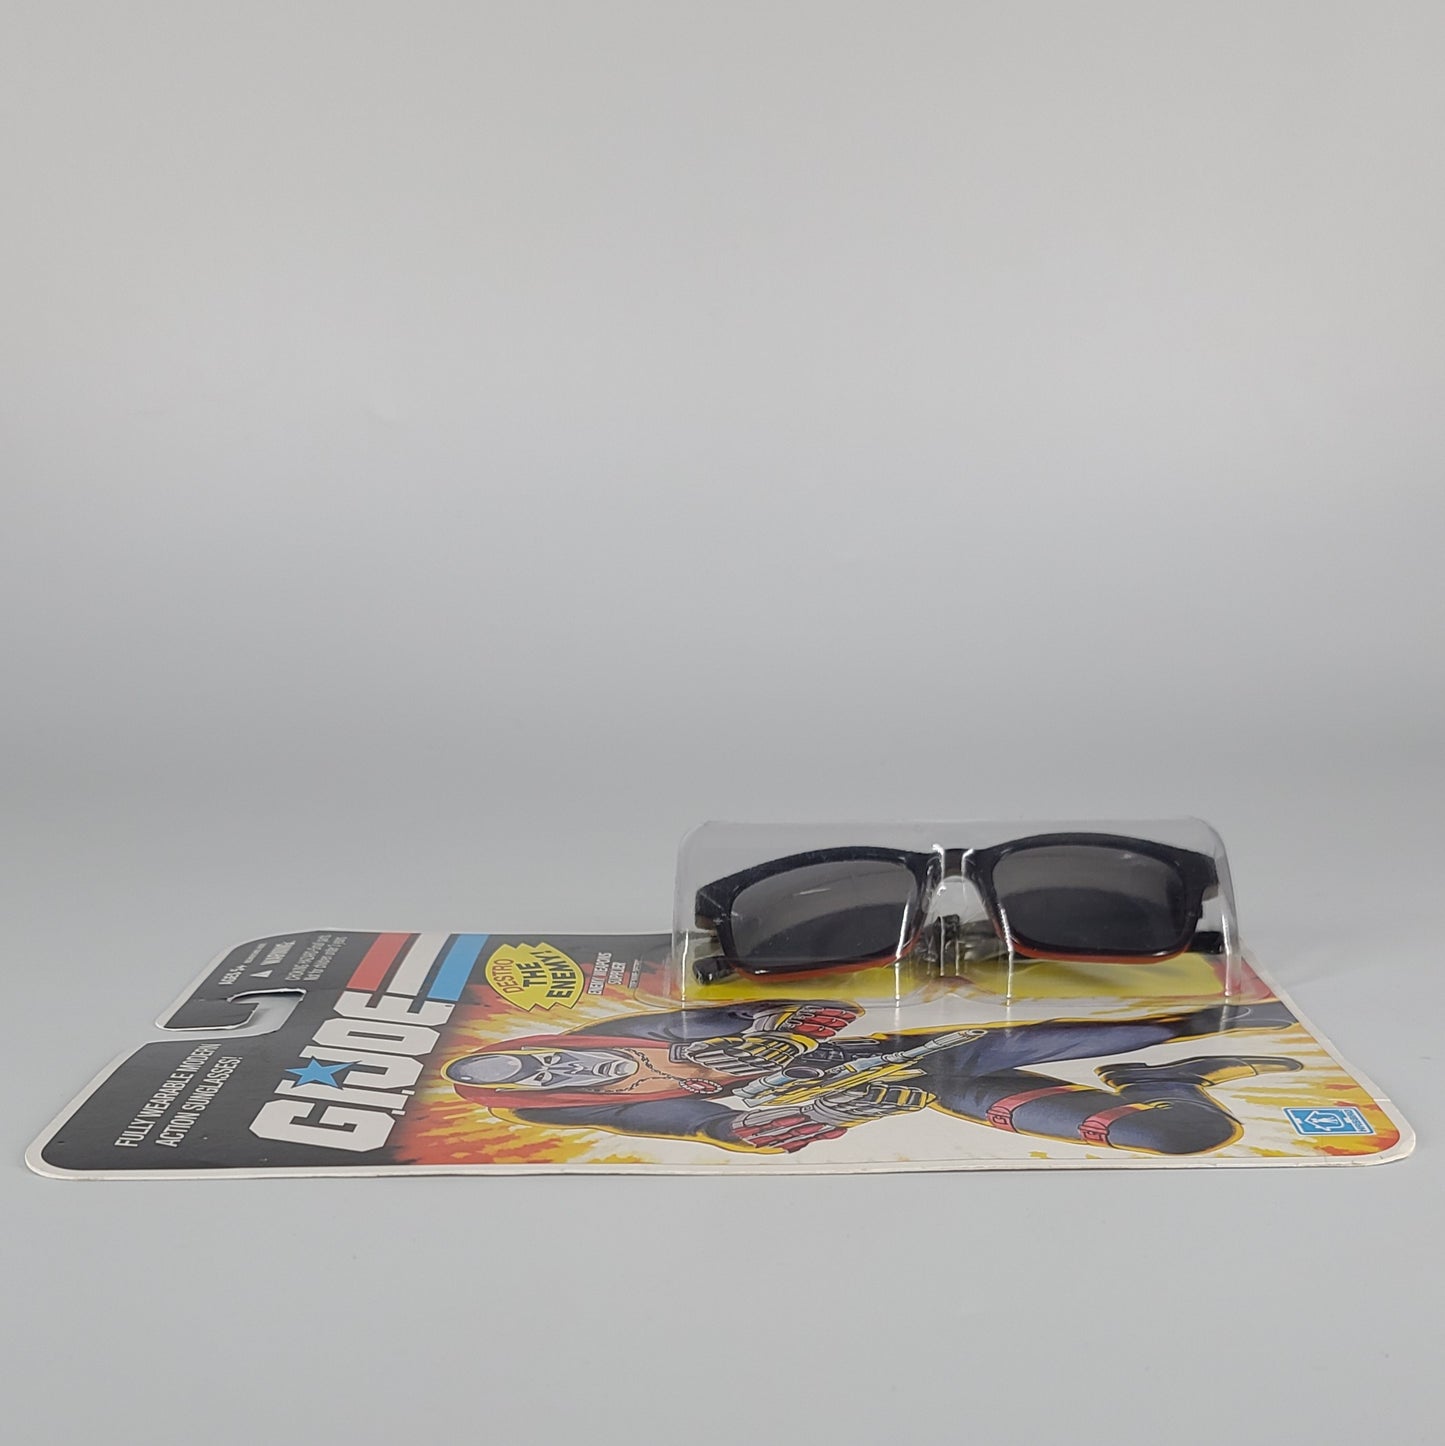 Hasbro G.I. Joe x Look/See 'Destro' Sunglasses